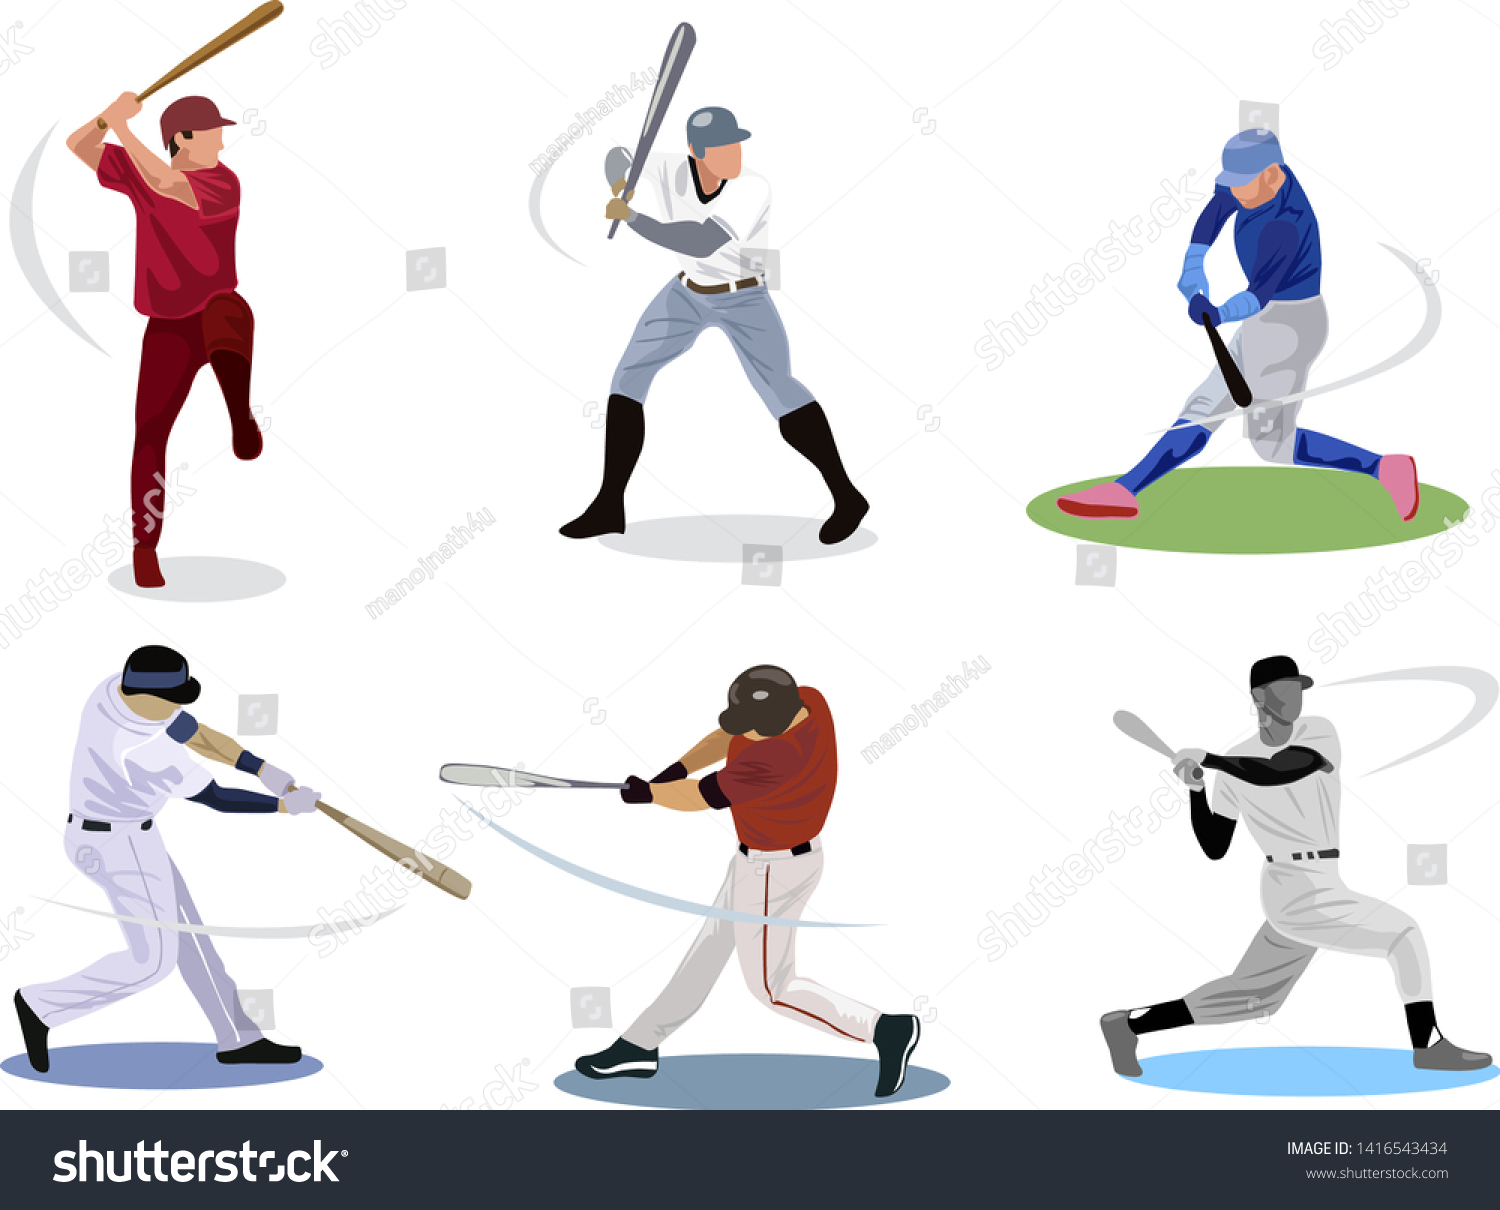 SVG of Baseball batsmen vector illustrations for editorials and sports news sections svg